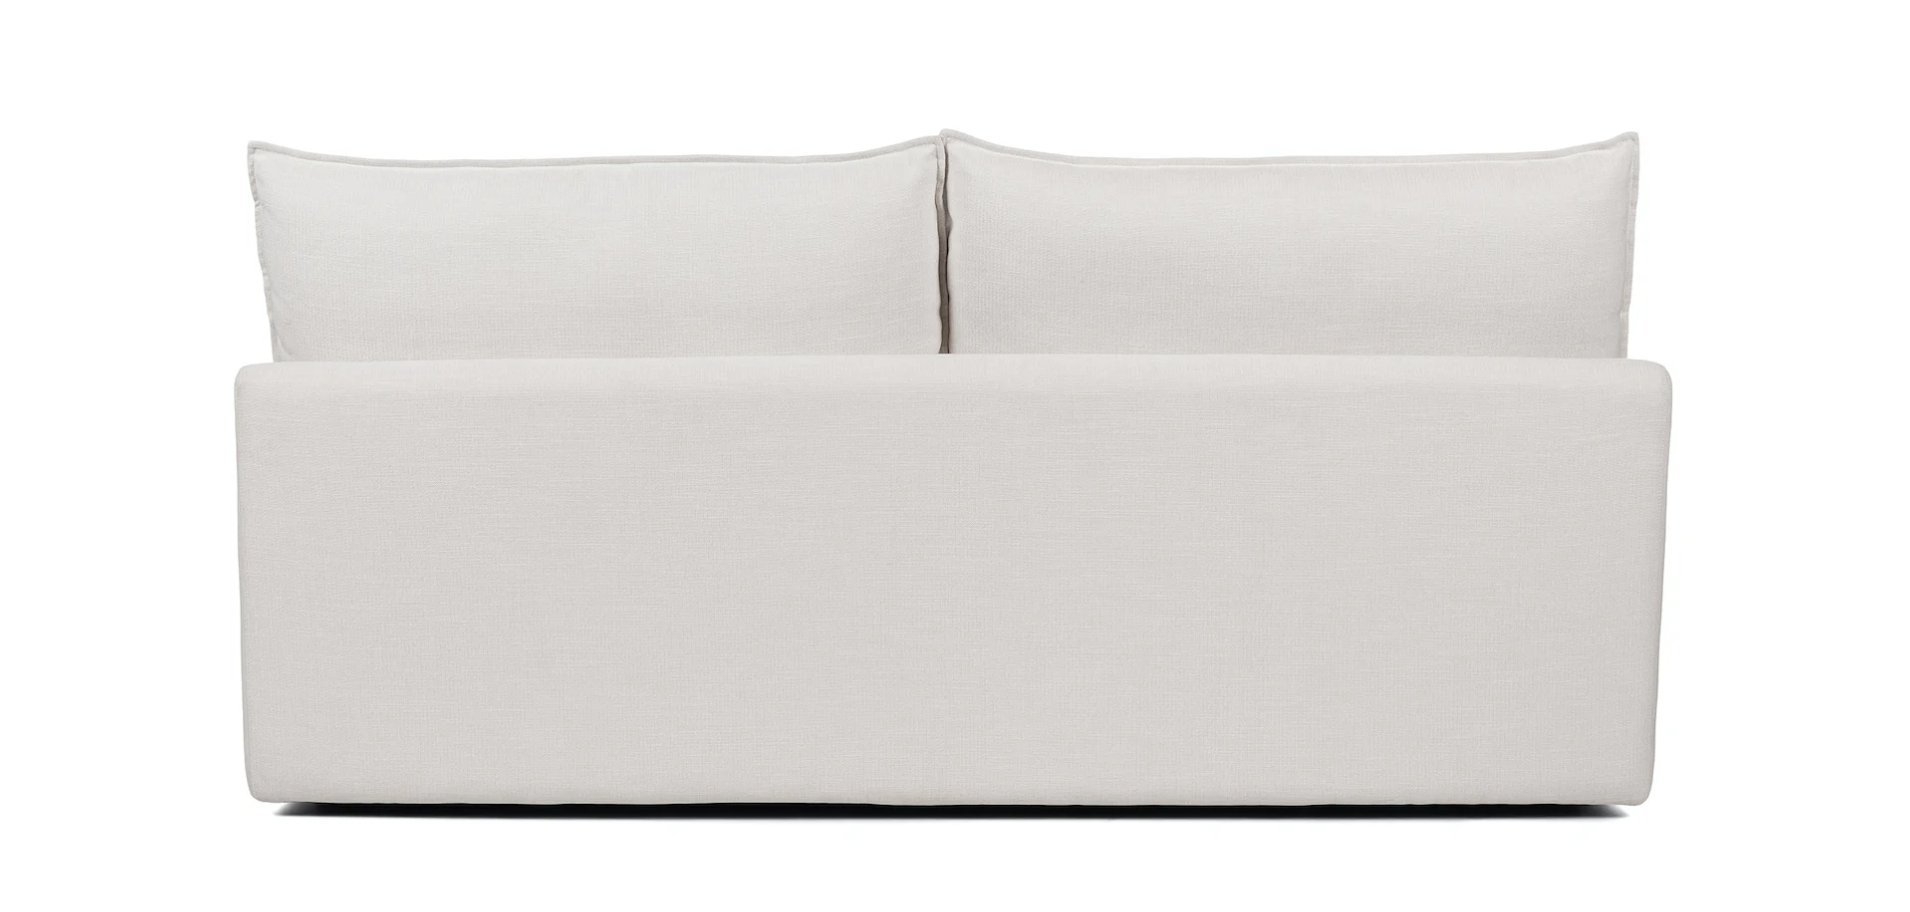 Braam Vintage White Sofa Bed - Image 4